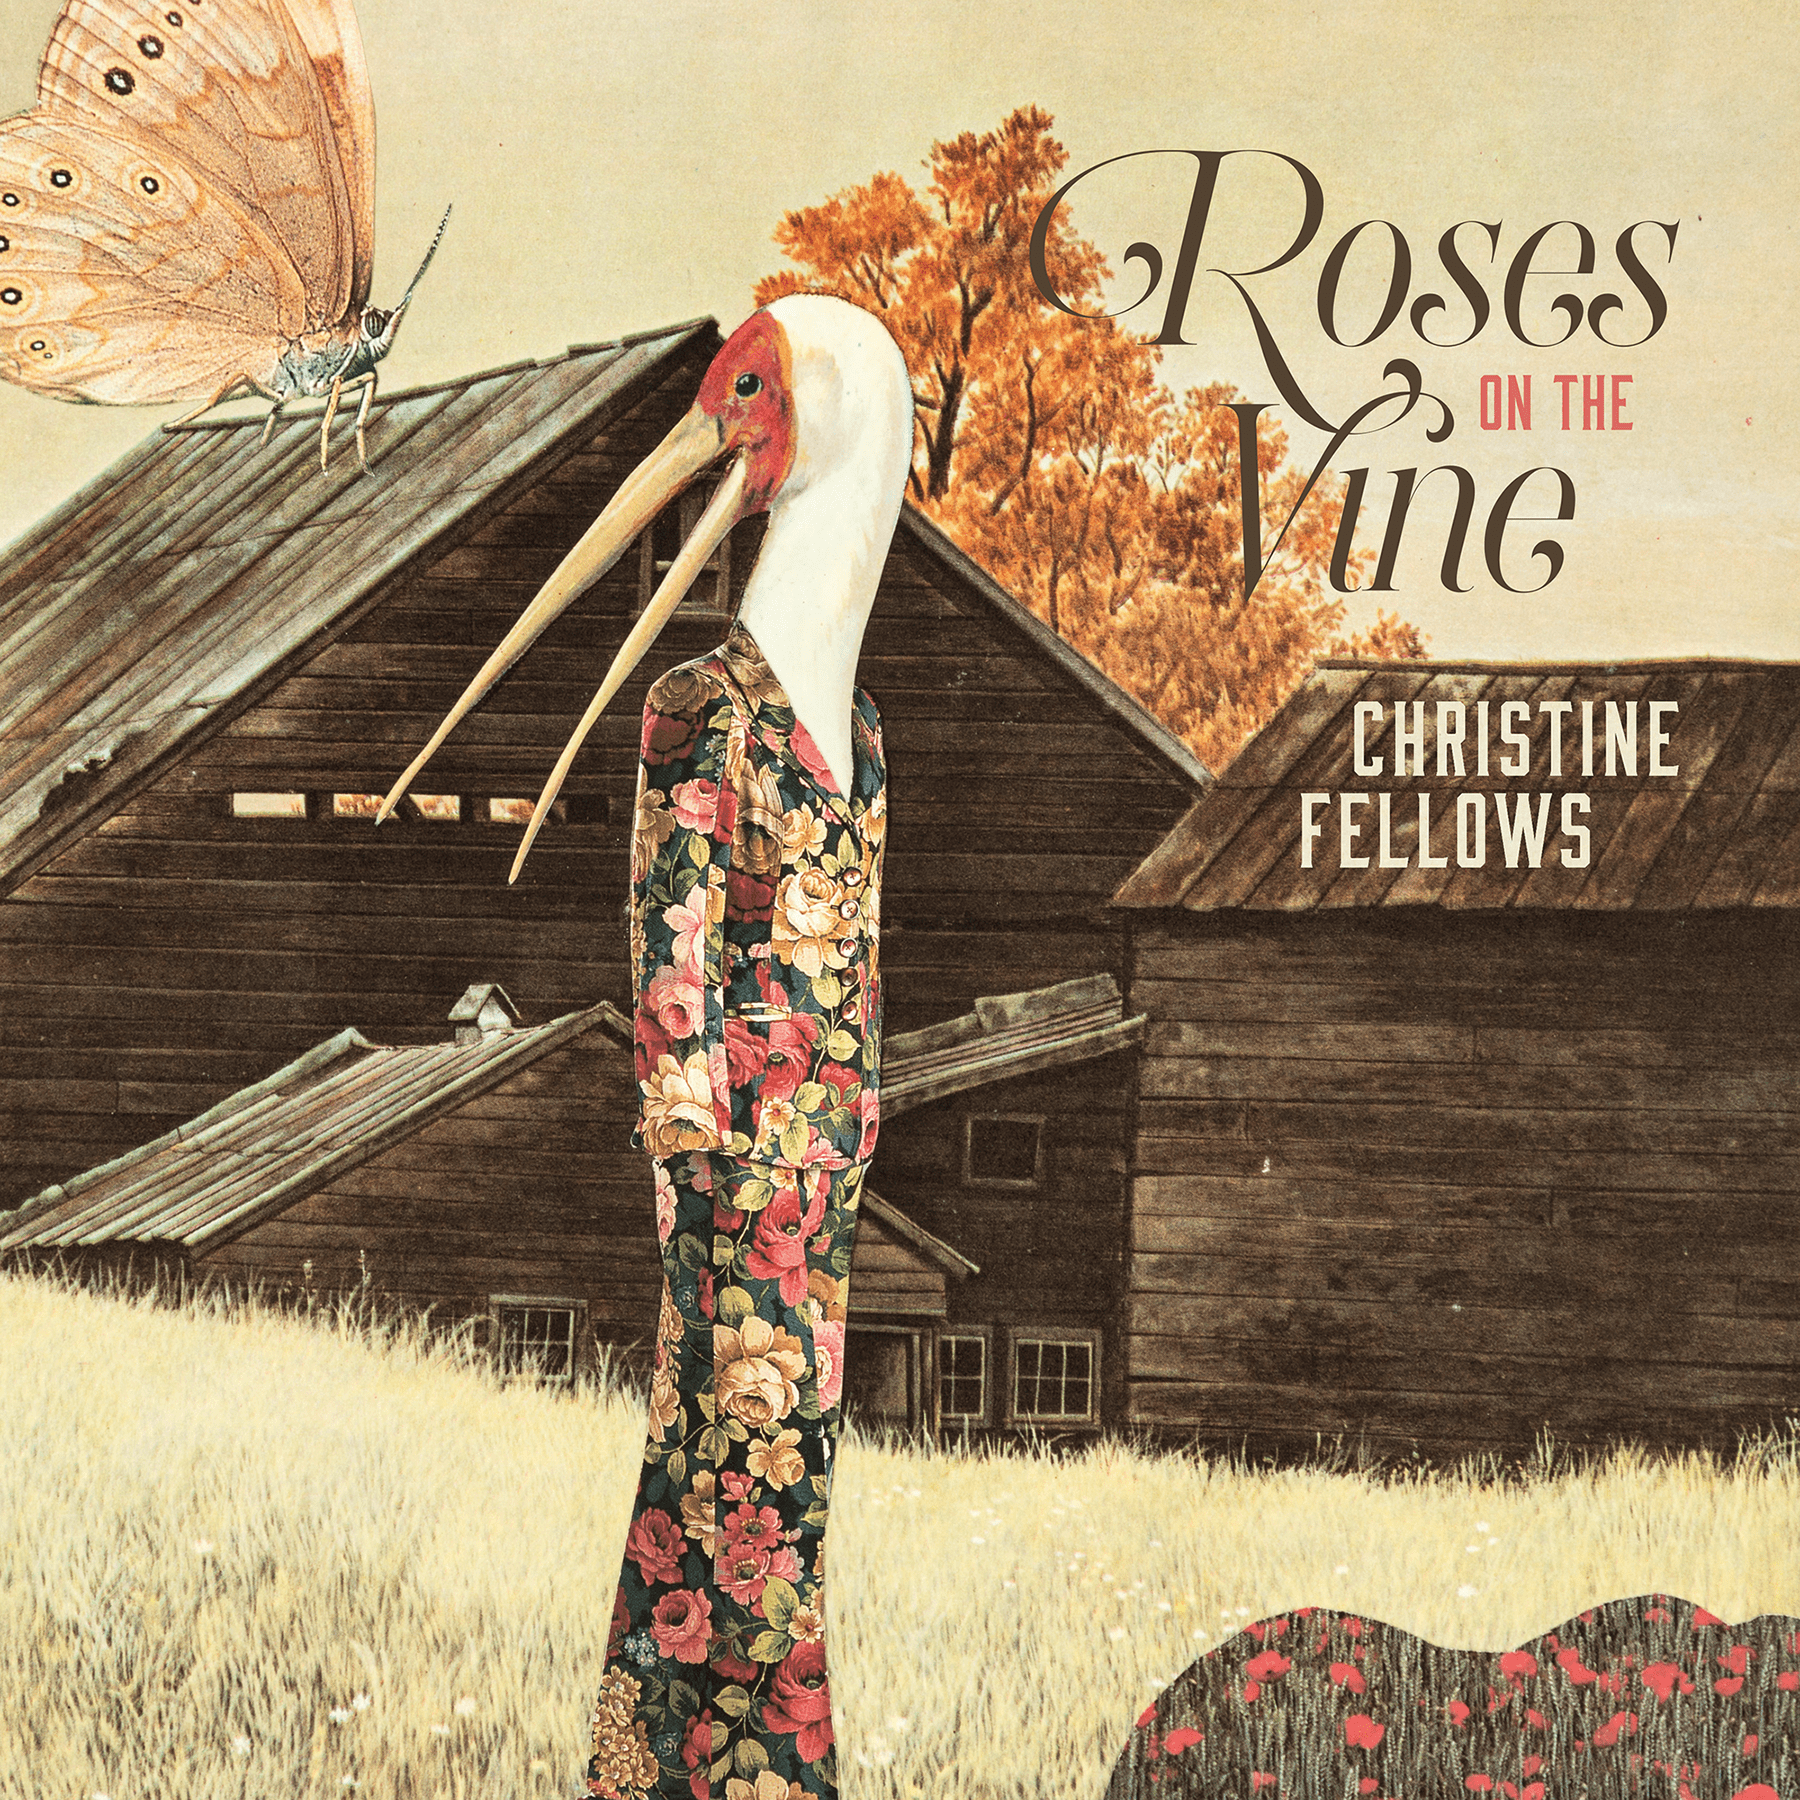 Christine Fellows seventh solo album. Vinyl/digital